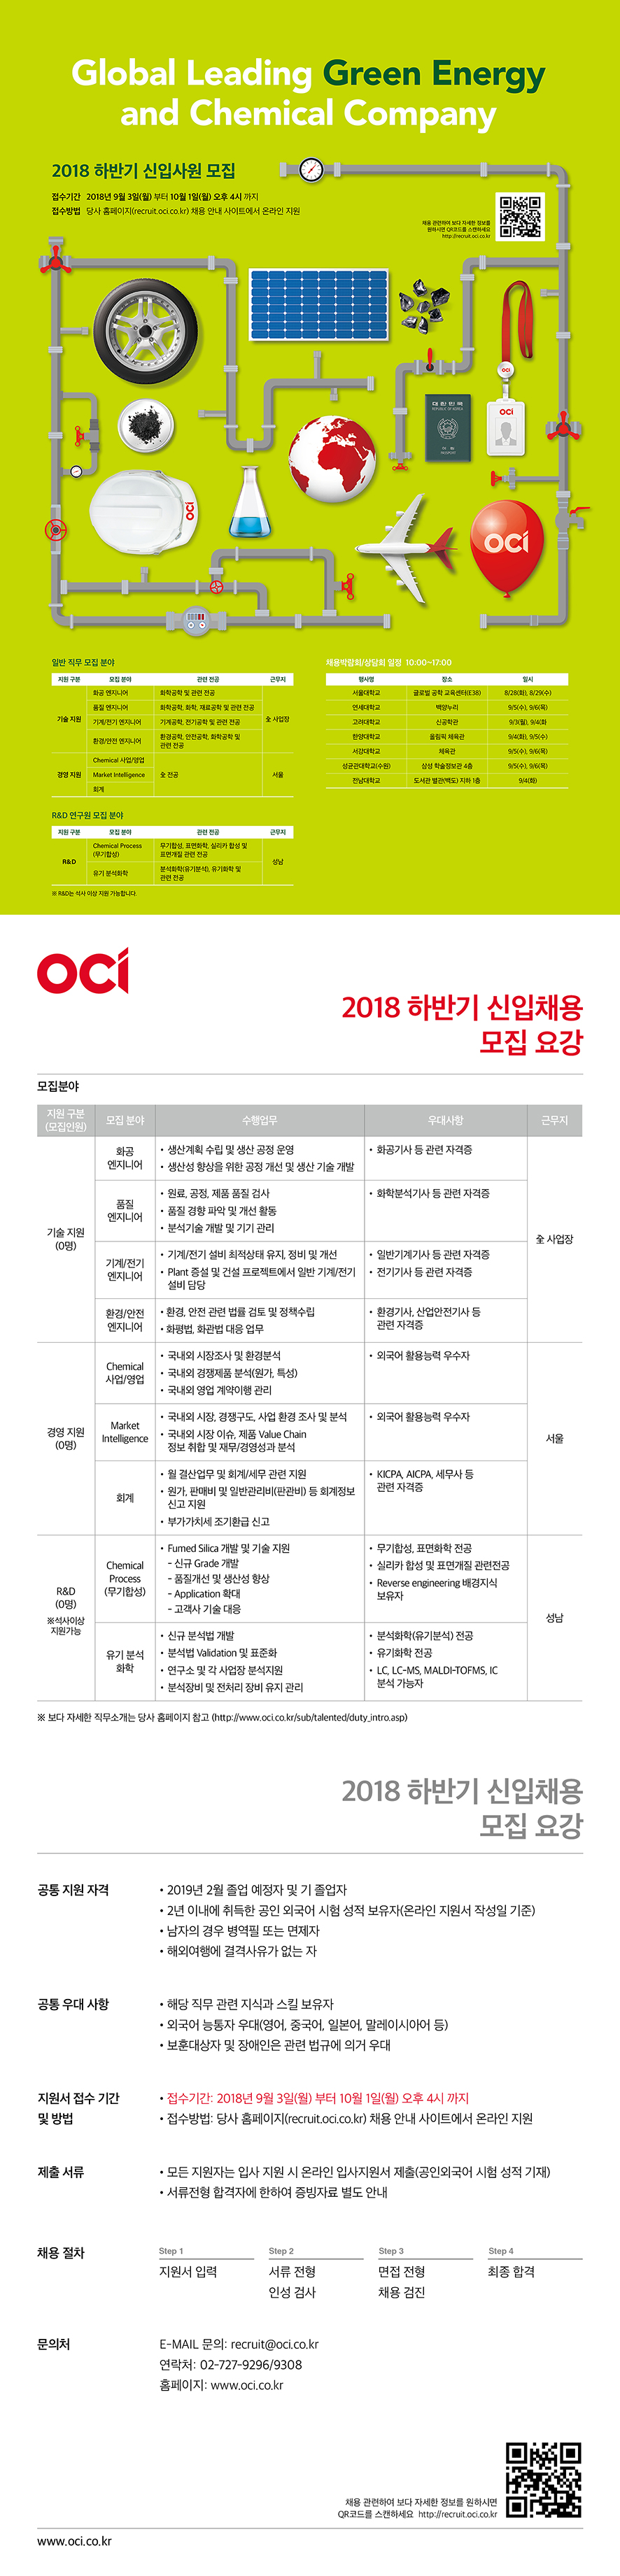 OCI_2018 하반기 신입채용_모집요강.jpg